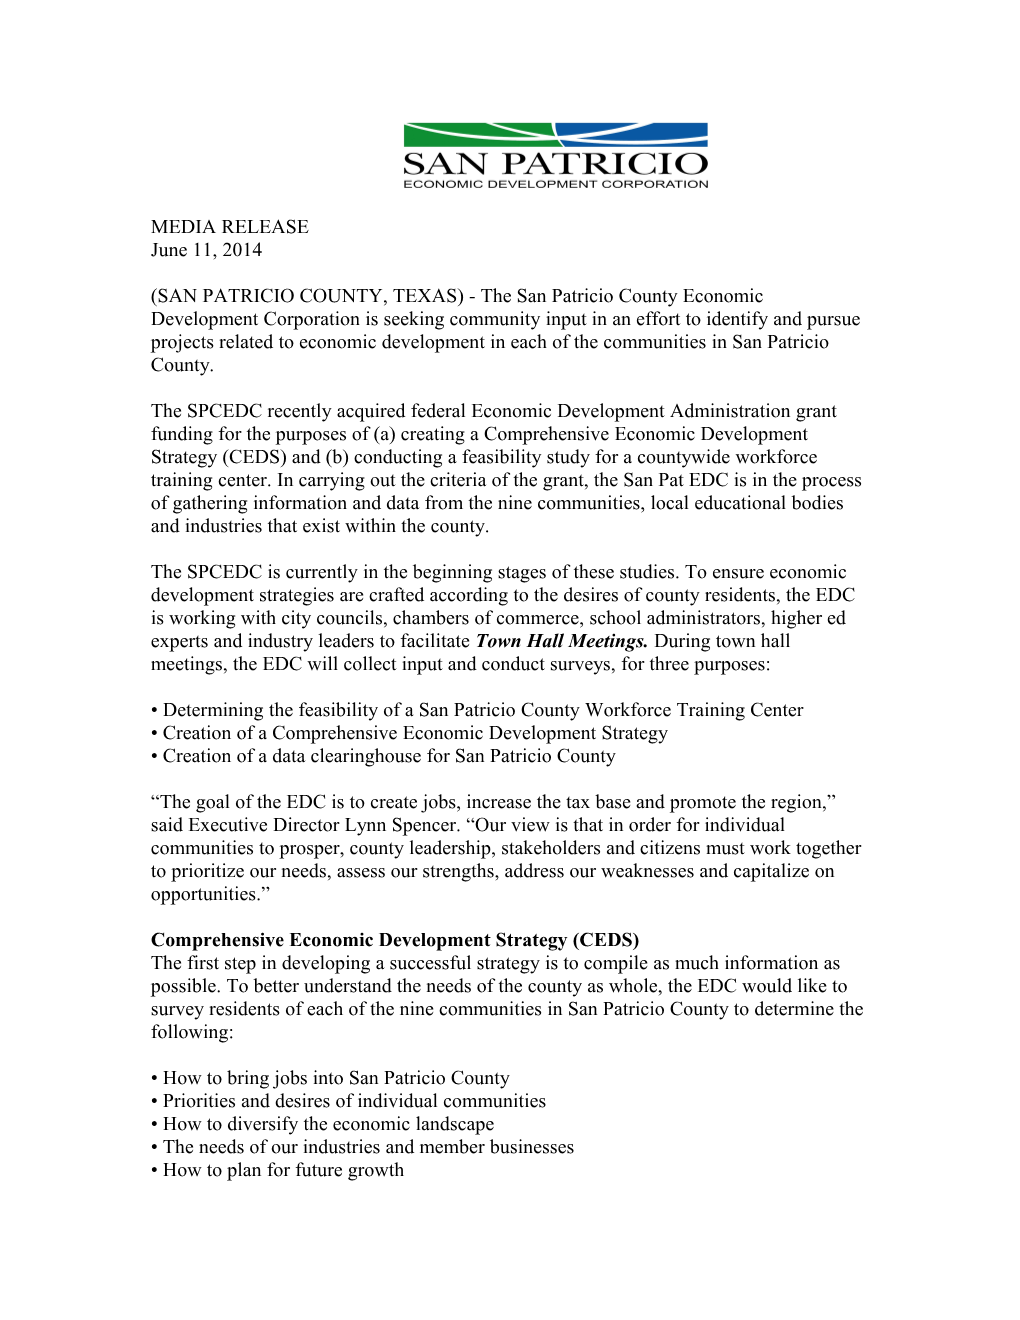 The San Patricio Economic Development Corporation Is in the Process of Gathering Information